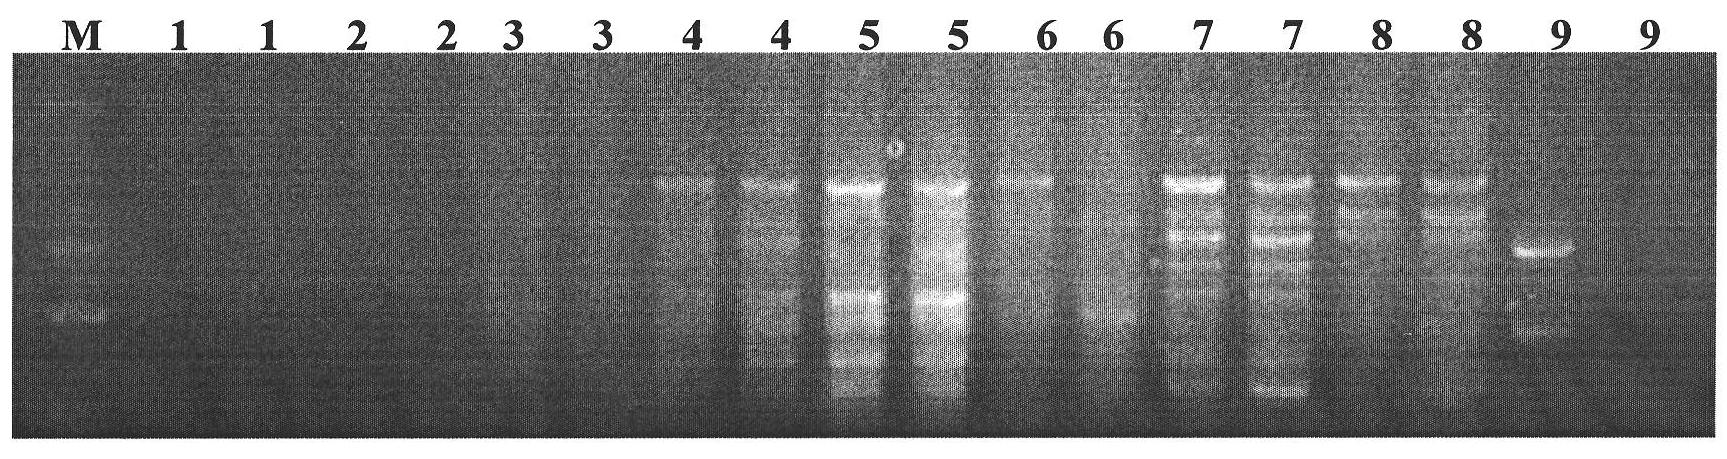 Buchloe dactyloides ISSR-PCR molecular marker system